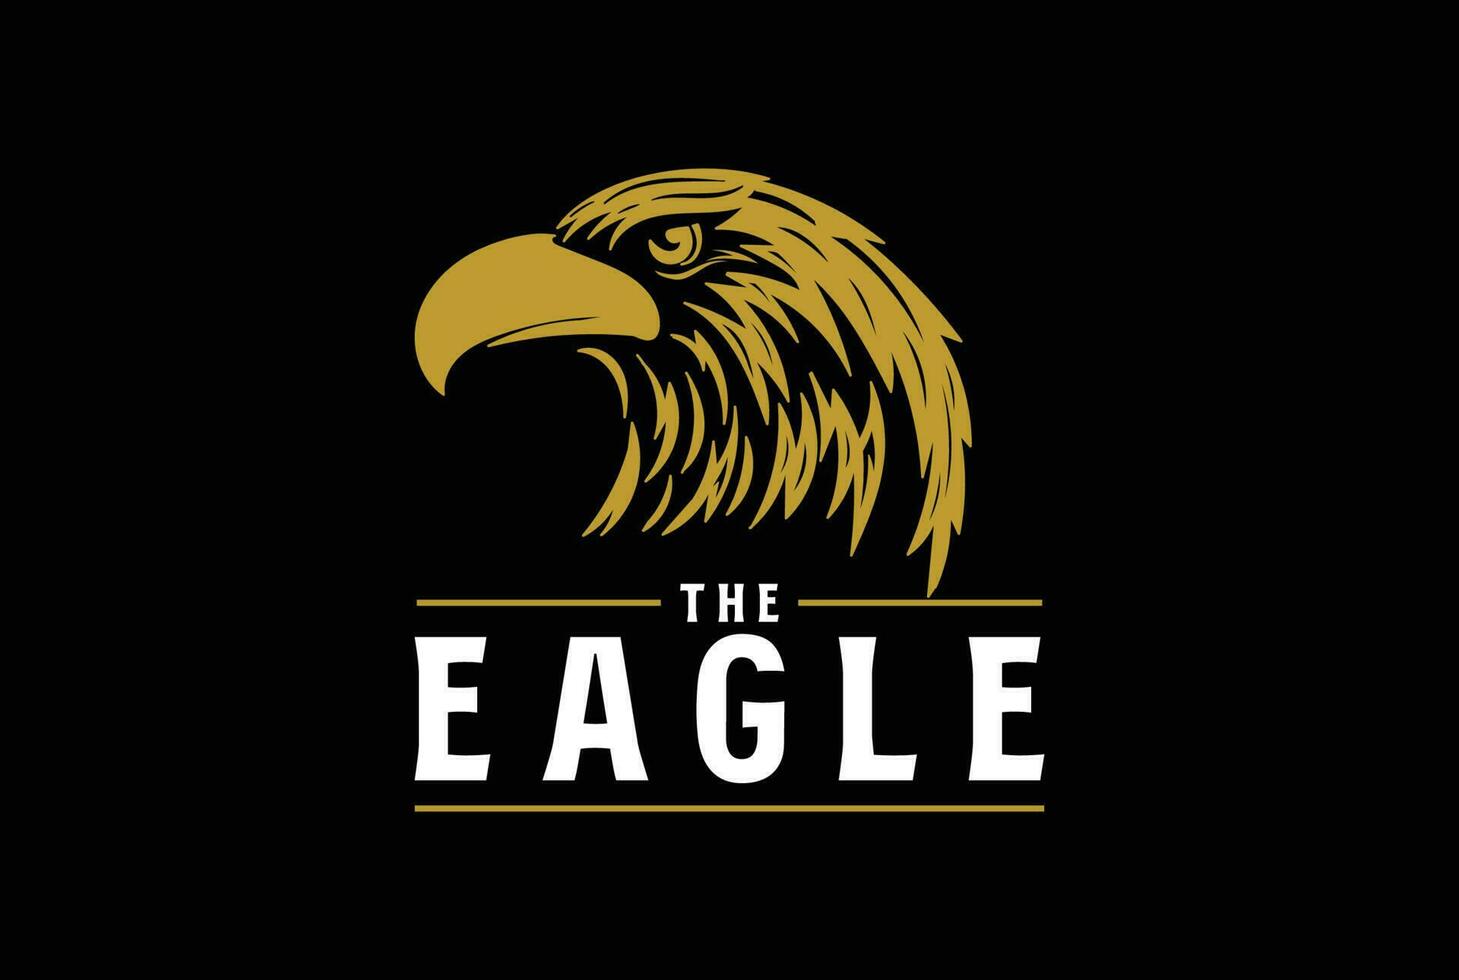 Jahrgang wütend stark Adler Kopf Gesicht Logo Design vektor